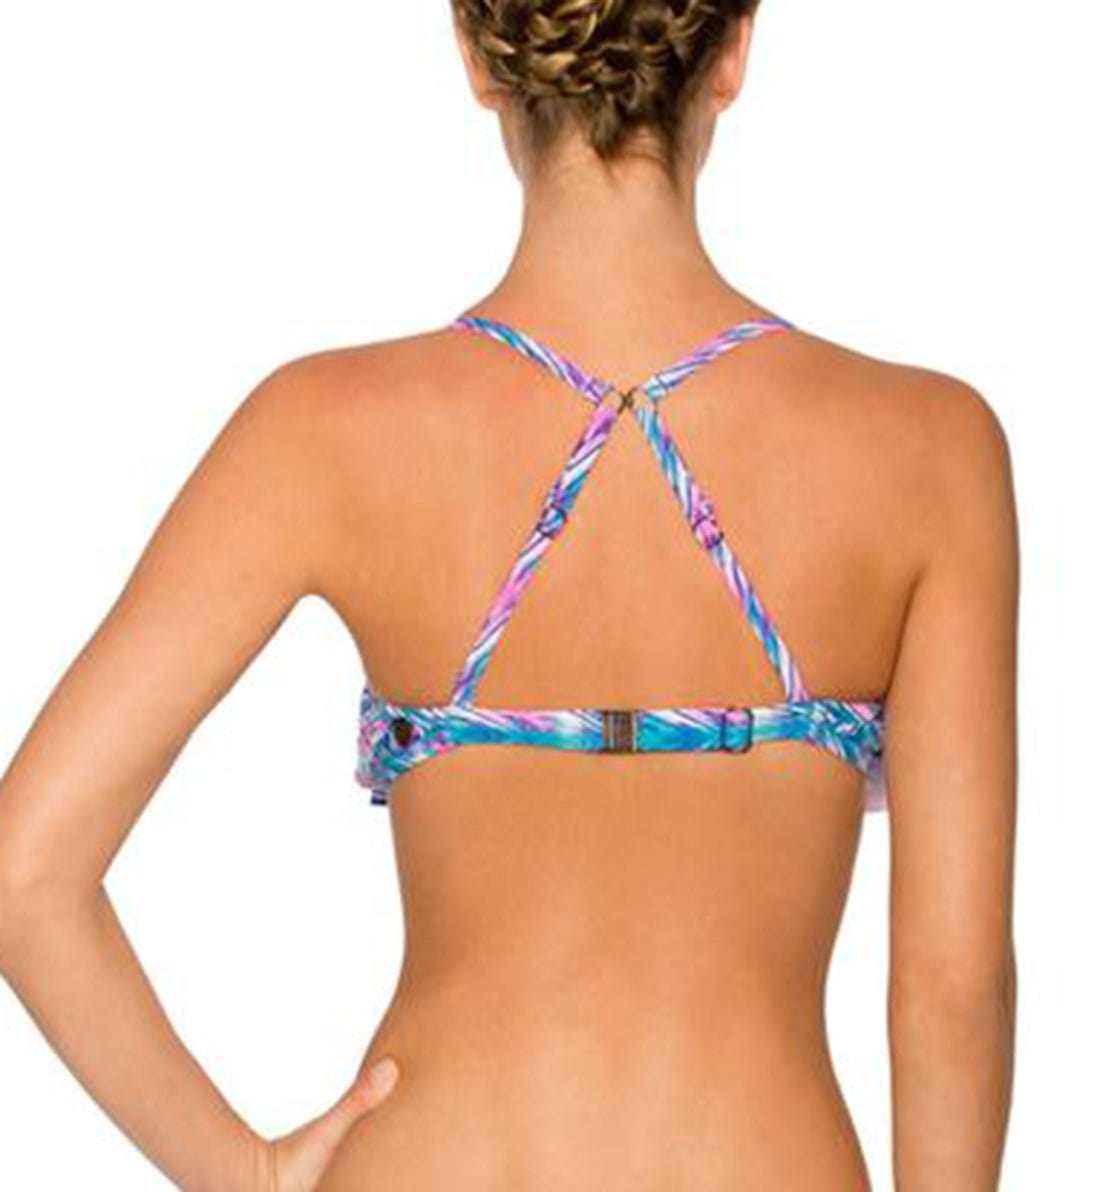 Swim Systems Double Strap Underwire Bikini w/ Removable Cups (A715),32D,Cascade - Cascade,32D